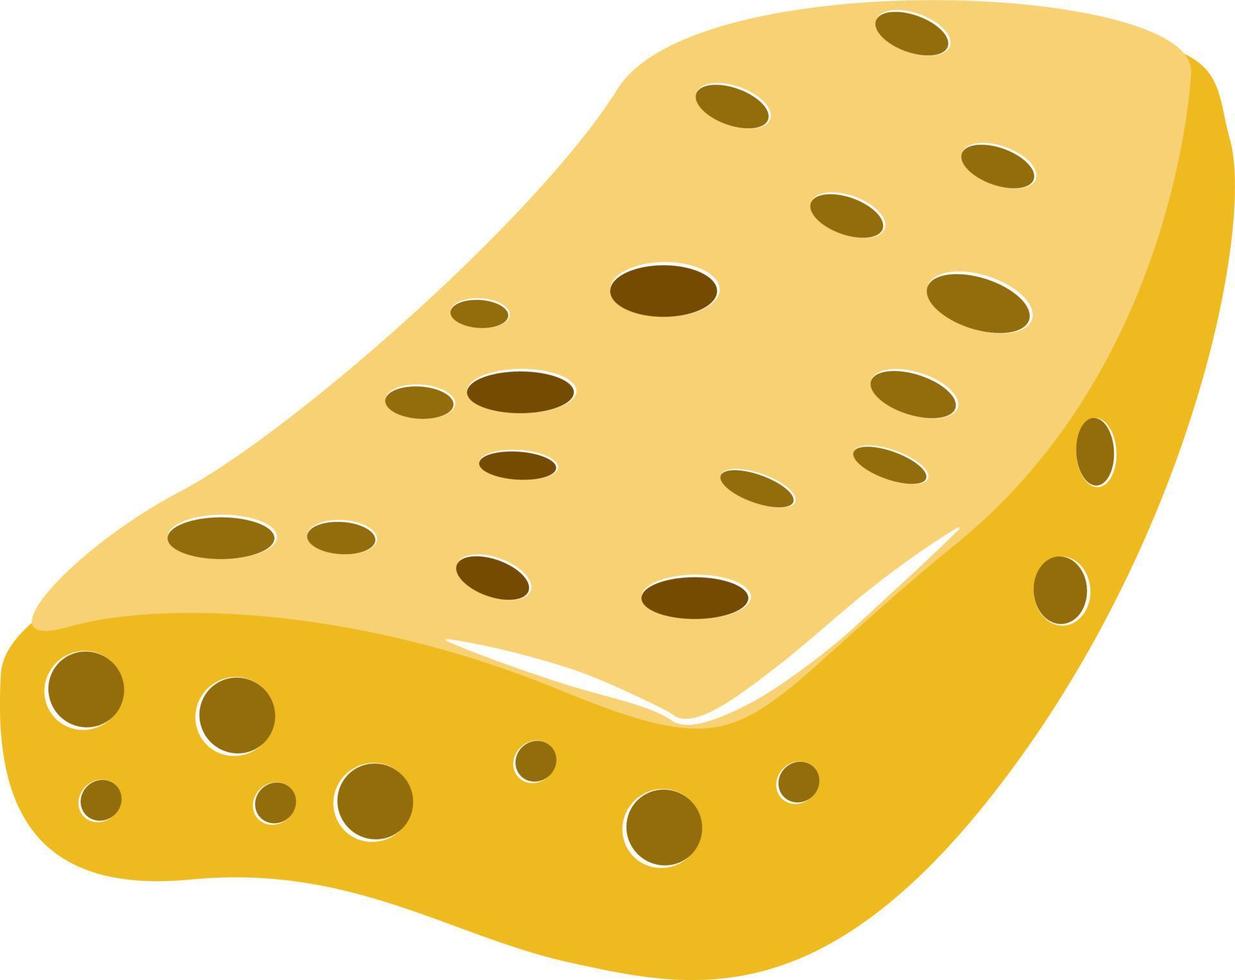 Yellow sponge, illustration, vector on white background.